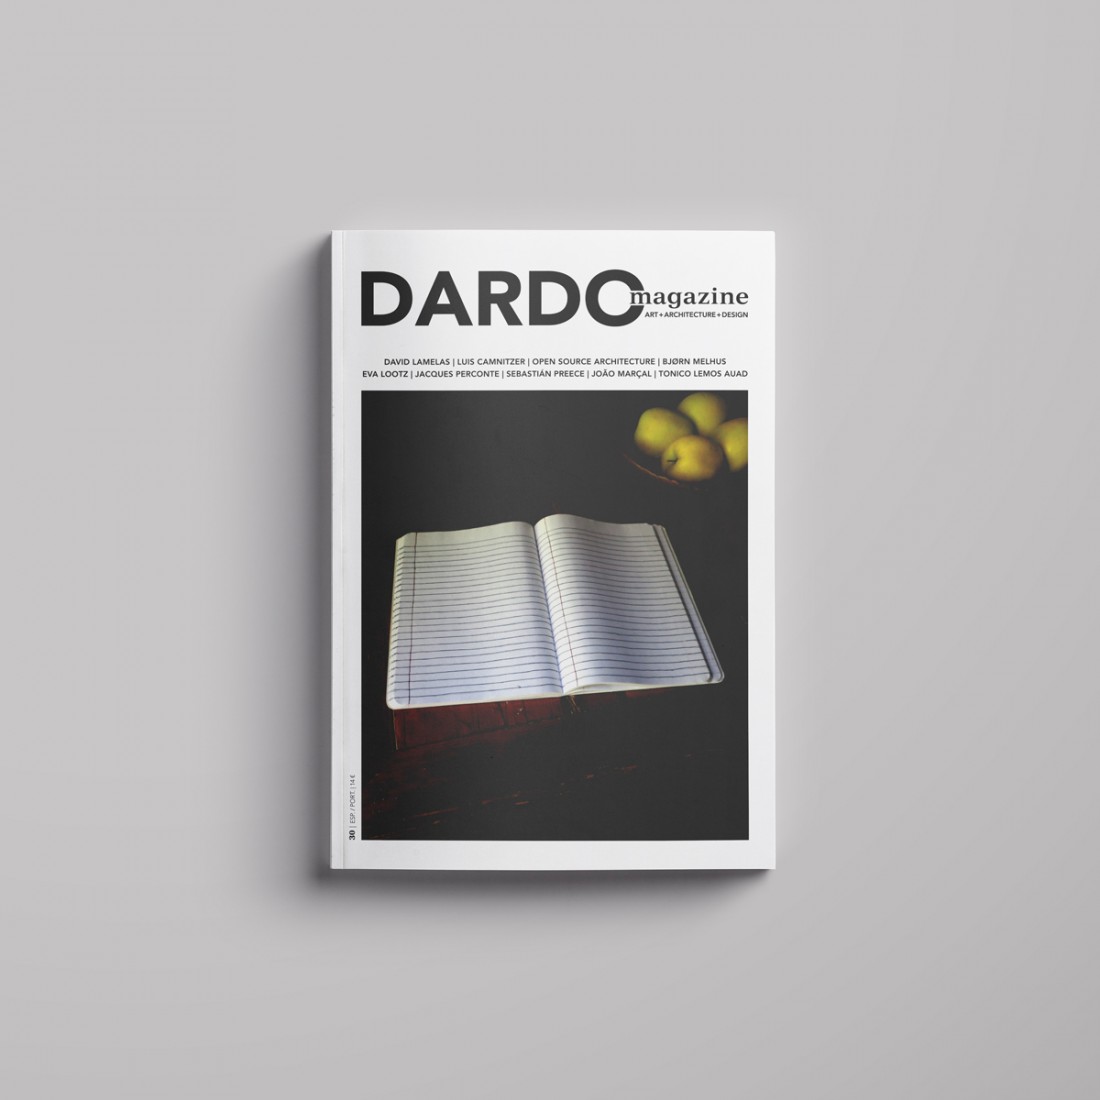 DARDOmagazine 30